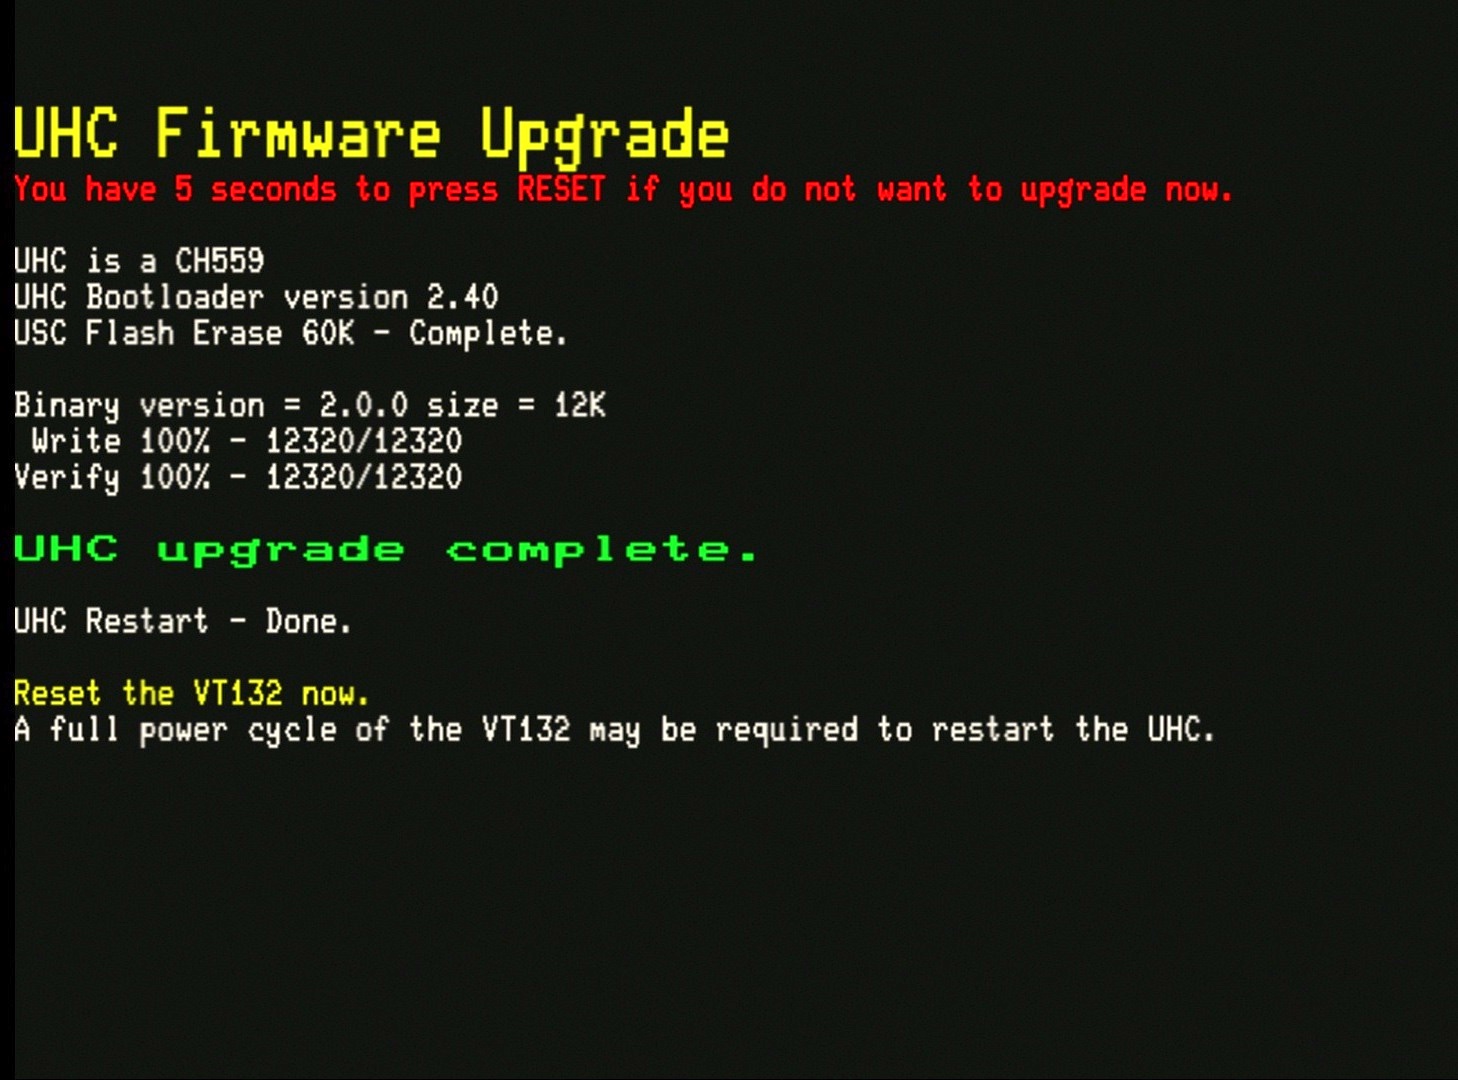 UHC firmware upgrade success